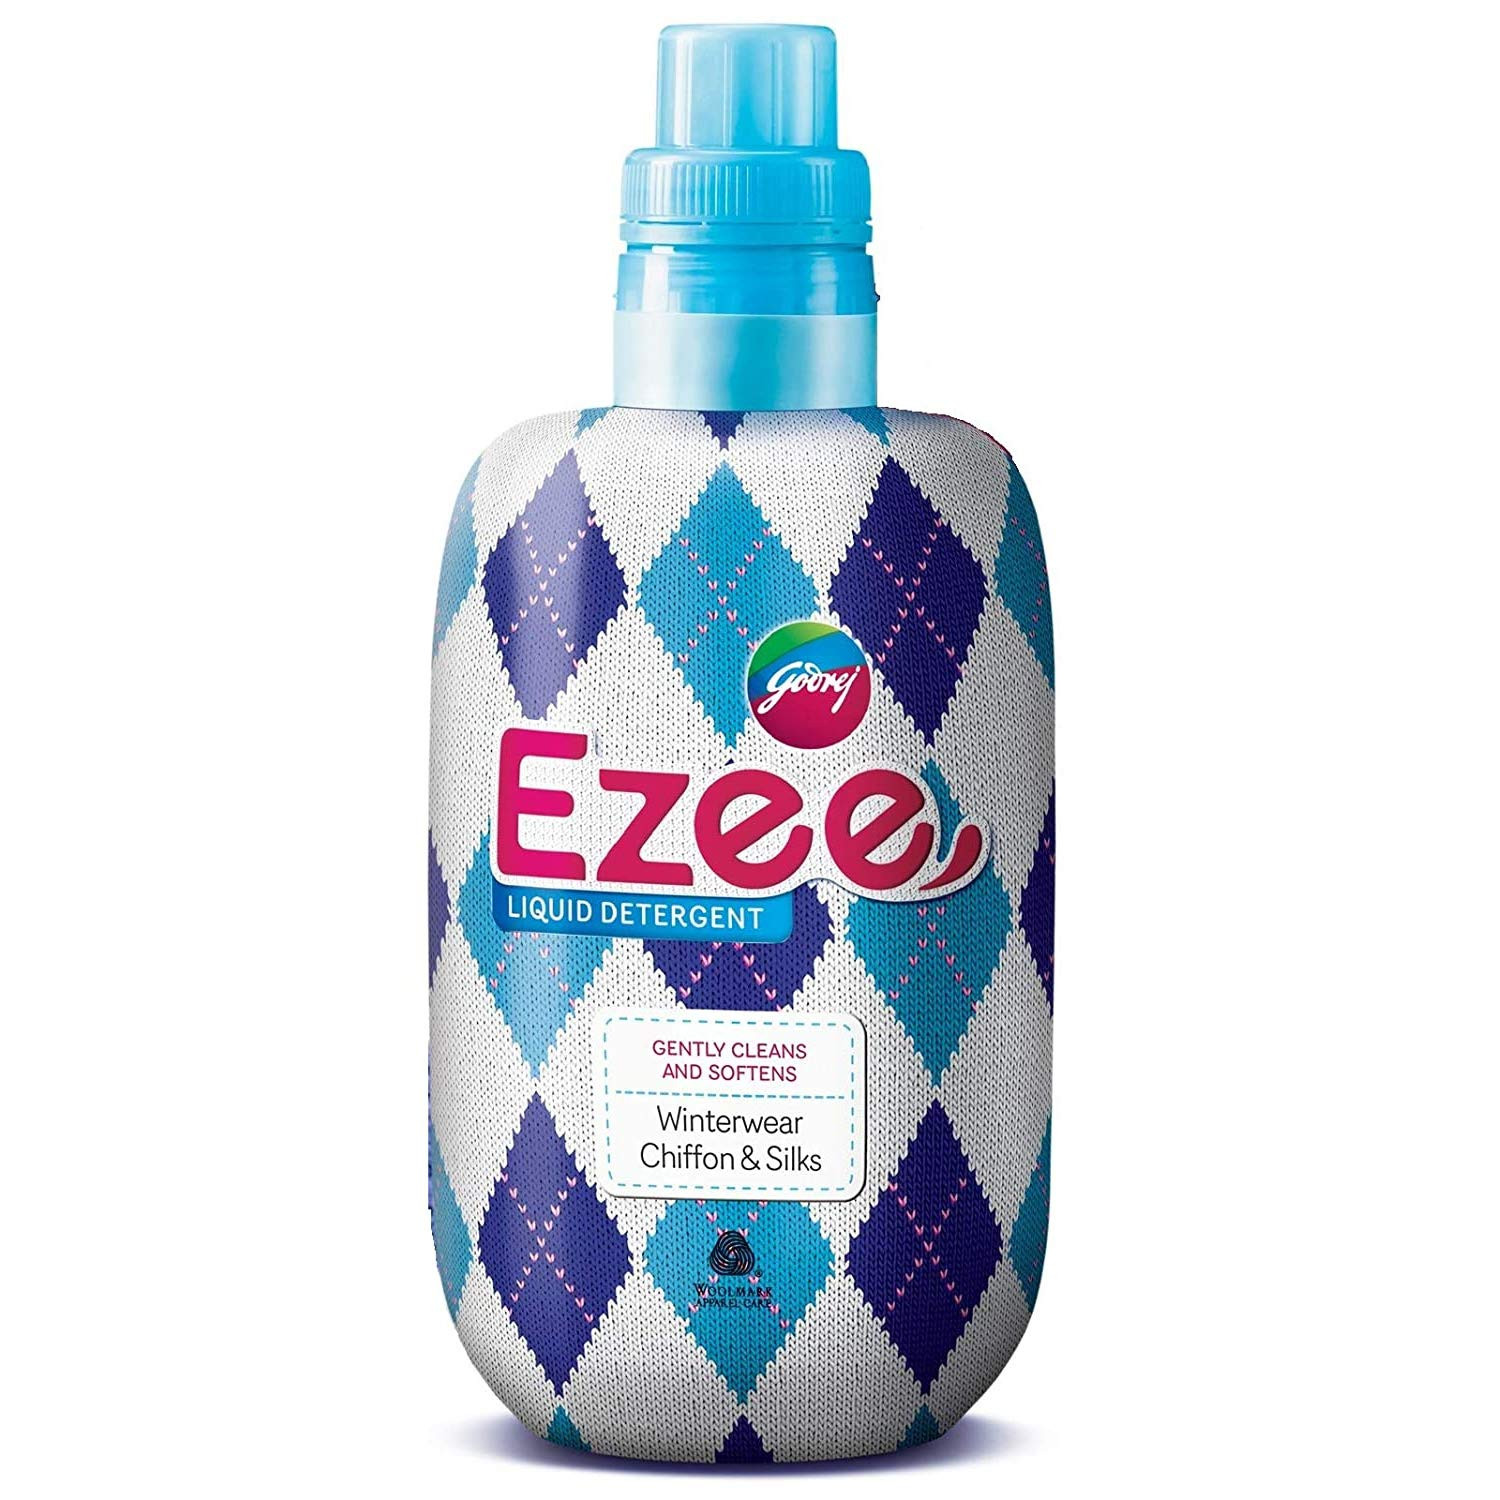 Godrej Ezee Liquid Detergent for both Top load and Front load Washing - 500g Bottle, for Winter Wear | Added Conditioner | No Soda Formula | Woolmark Certified